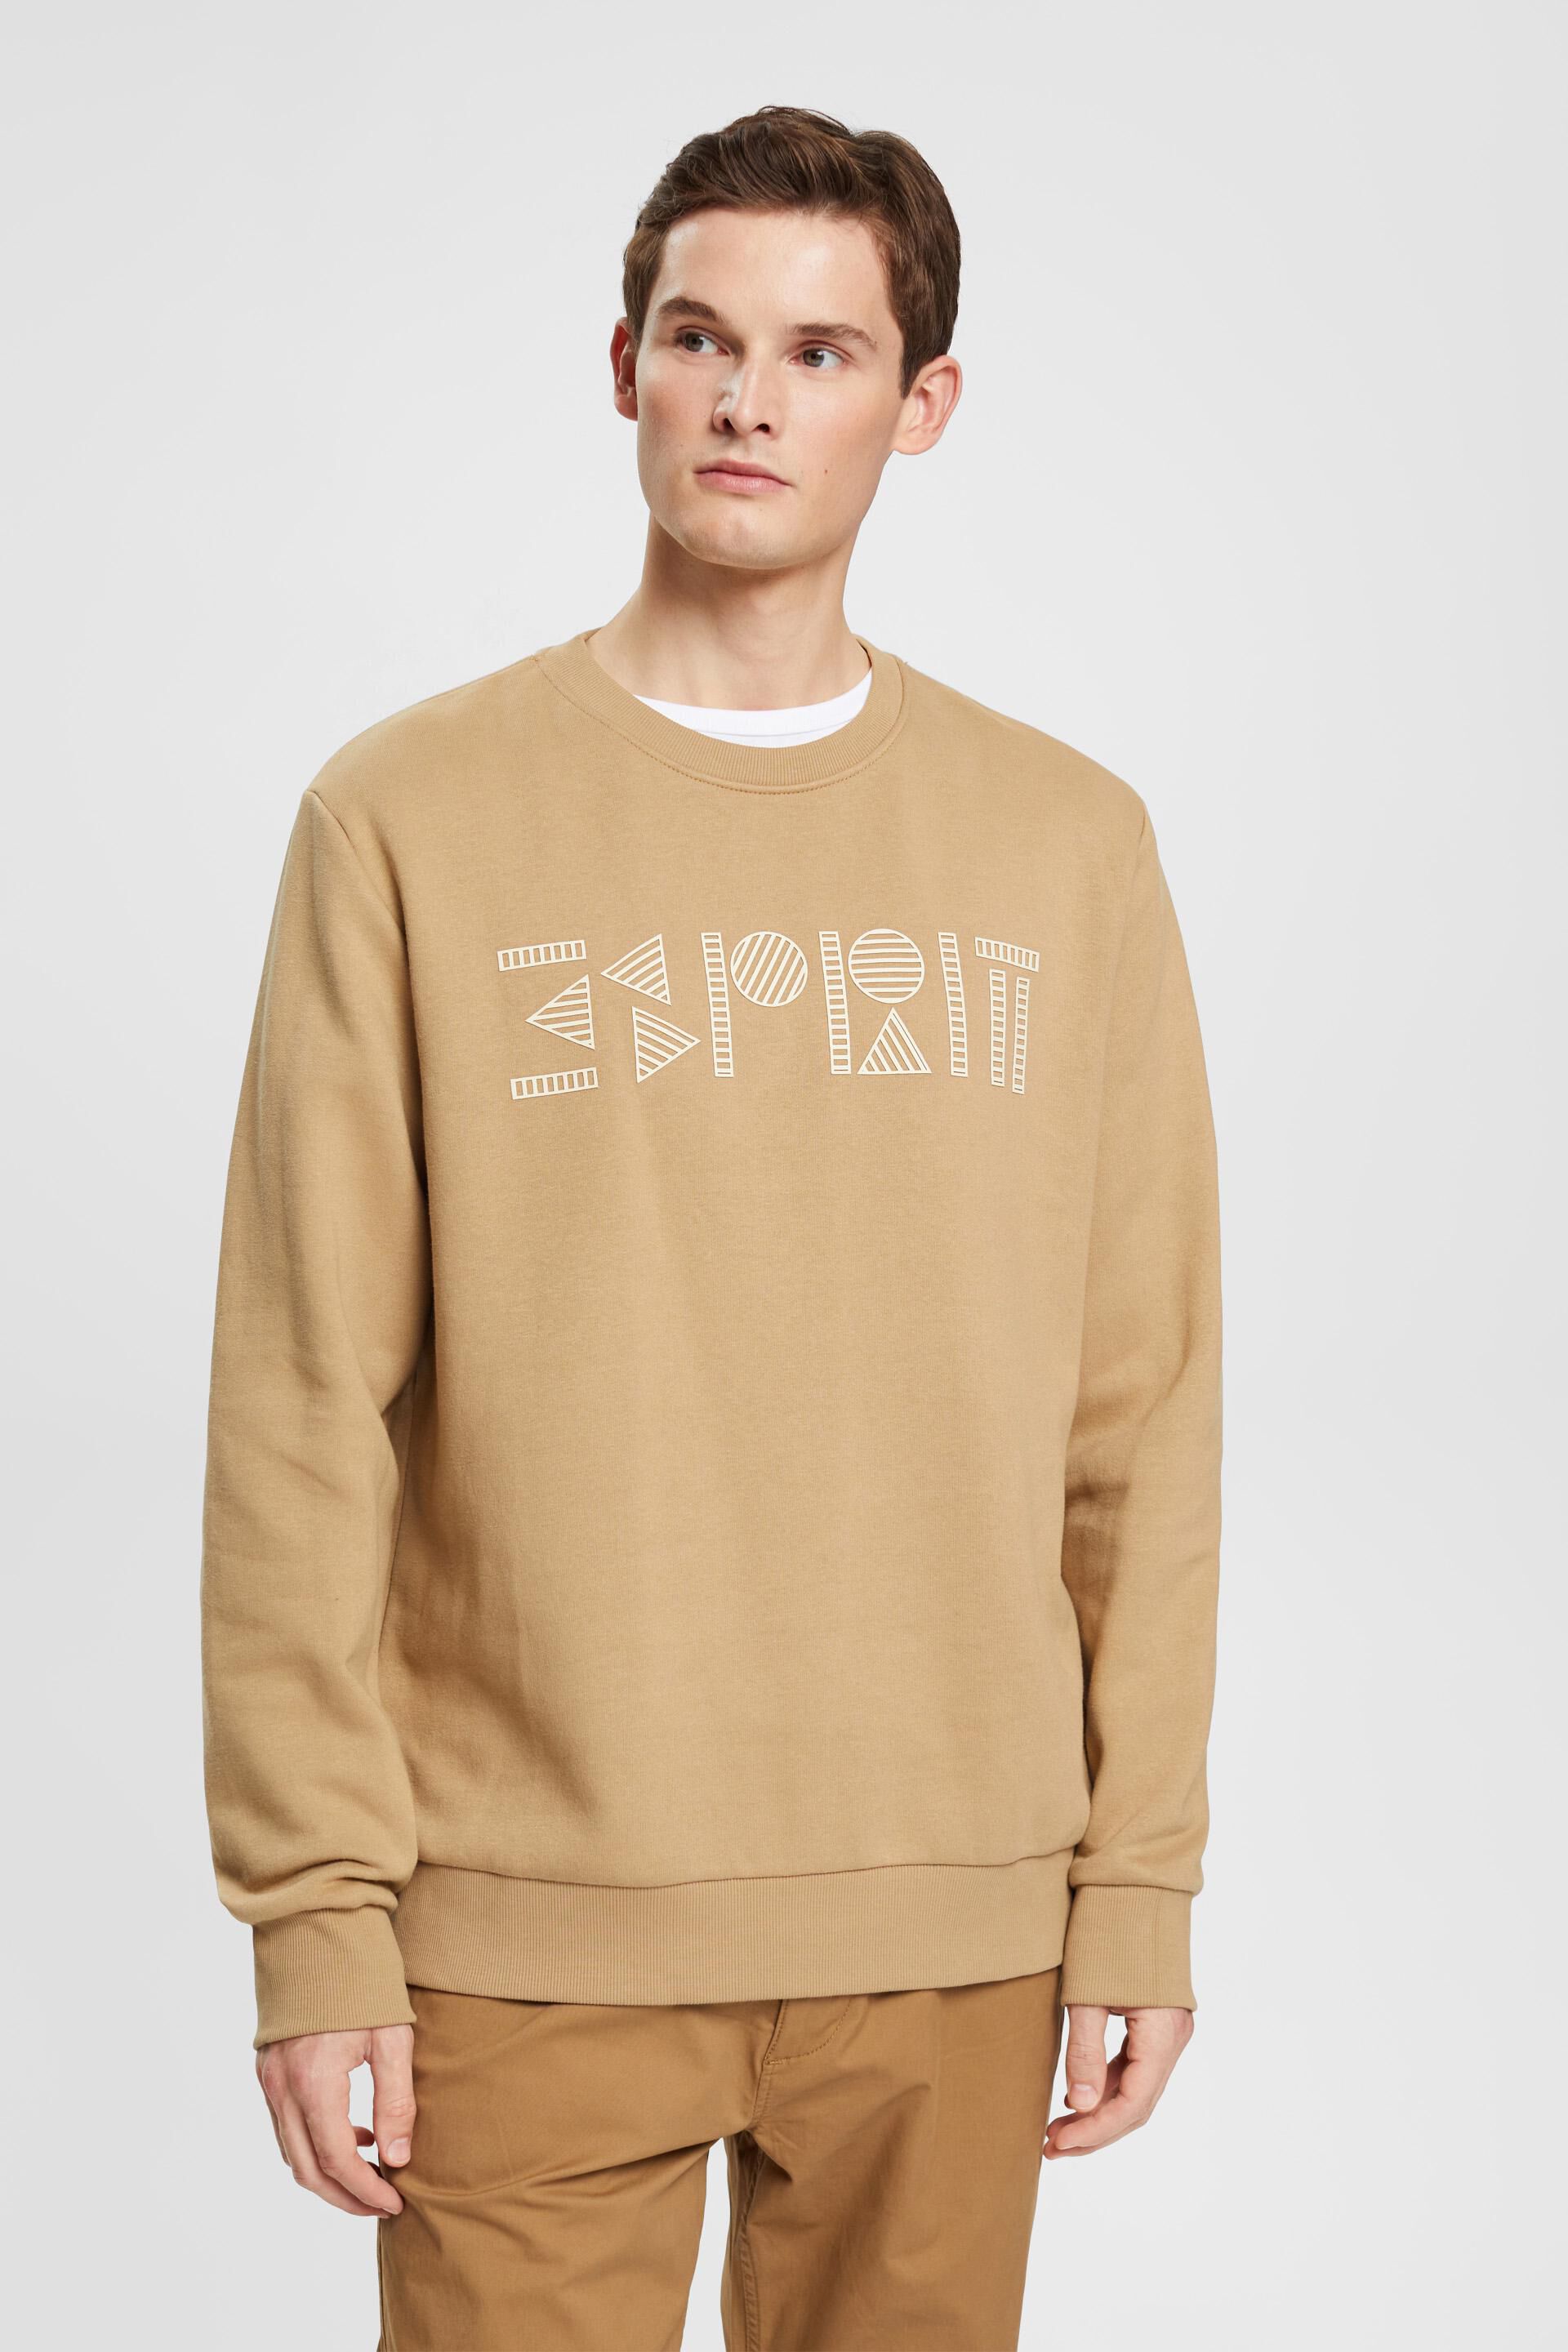 Esprit logo with Sweatshirt print